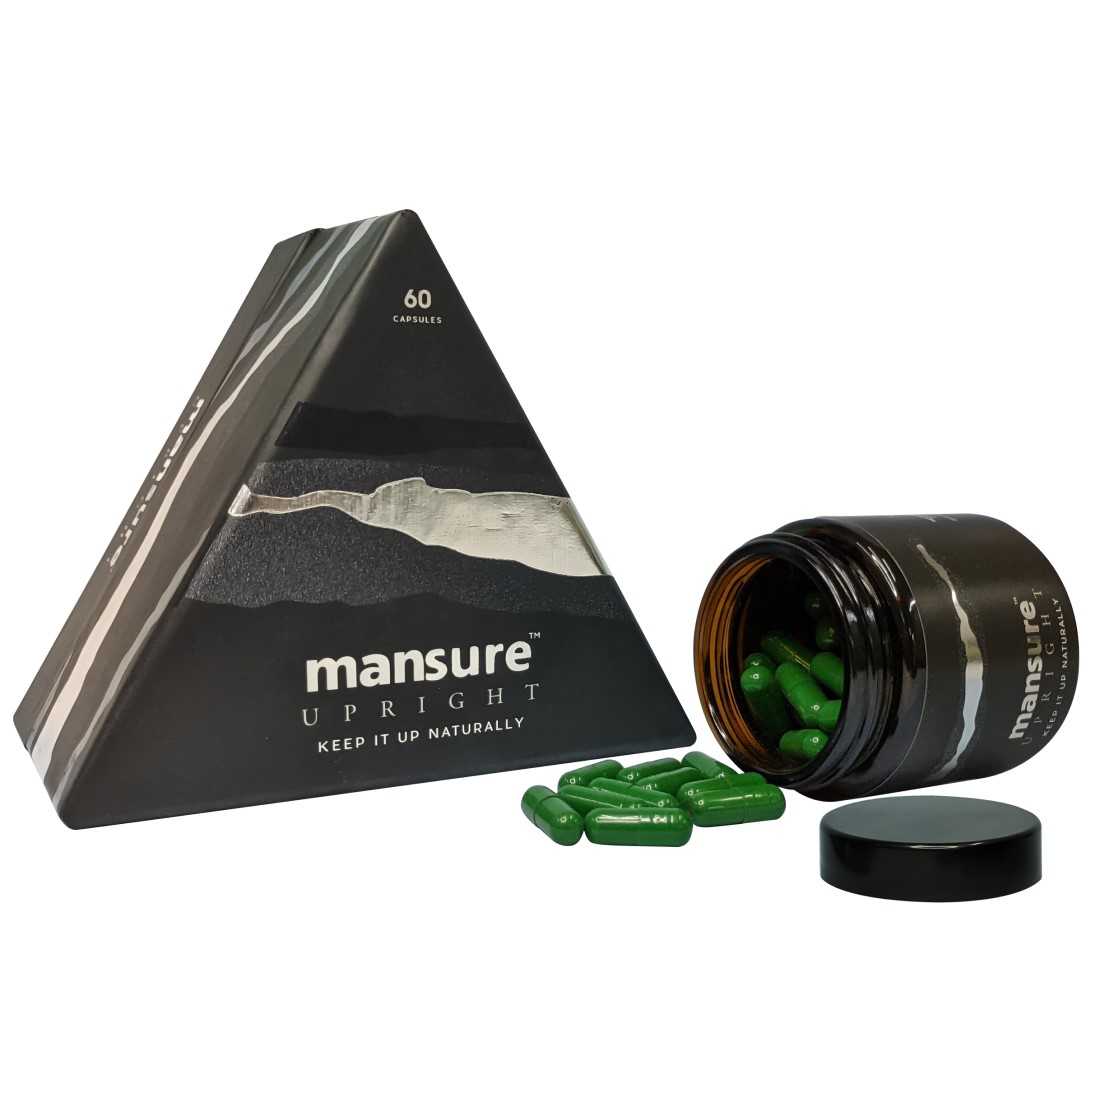 ManSure Pack of 1 ManSure UPRIGHT for Men's Health - 60 Capsules